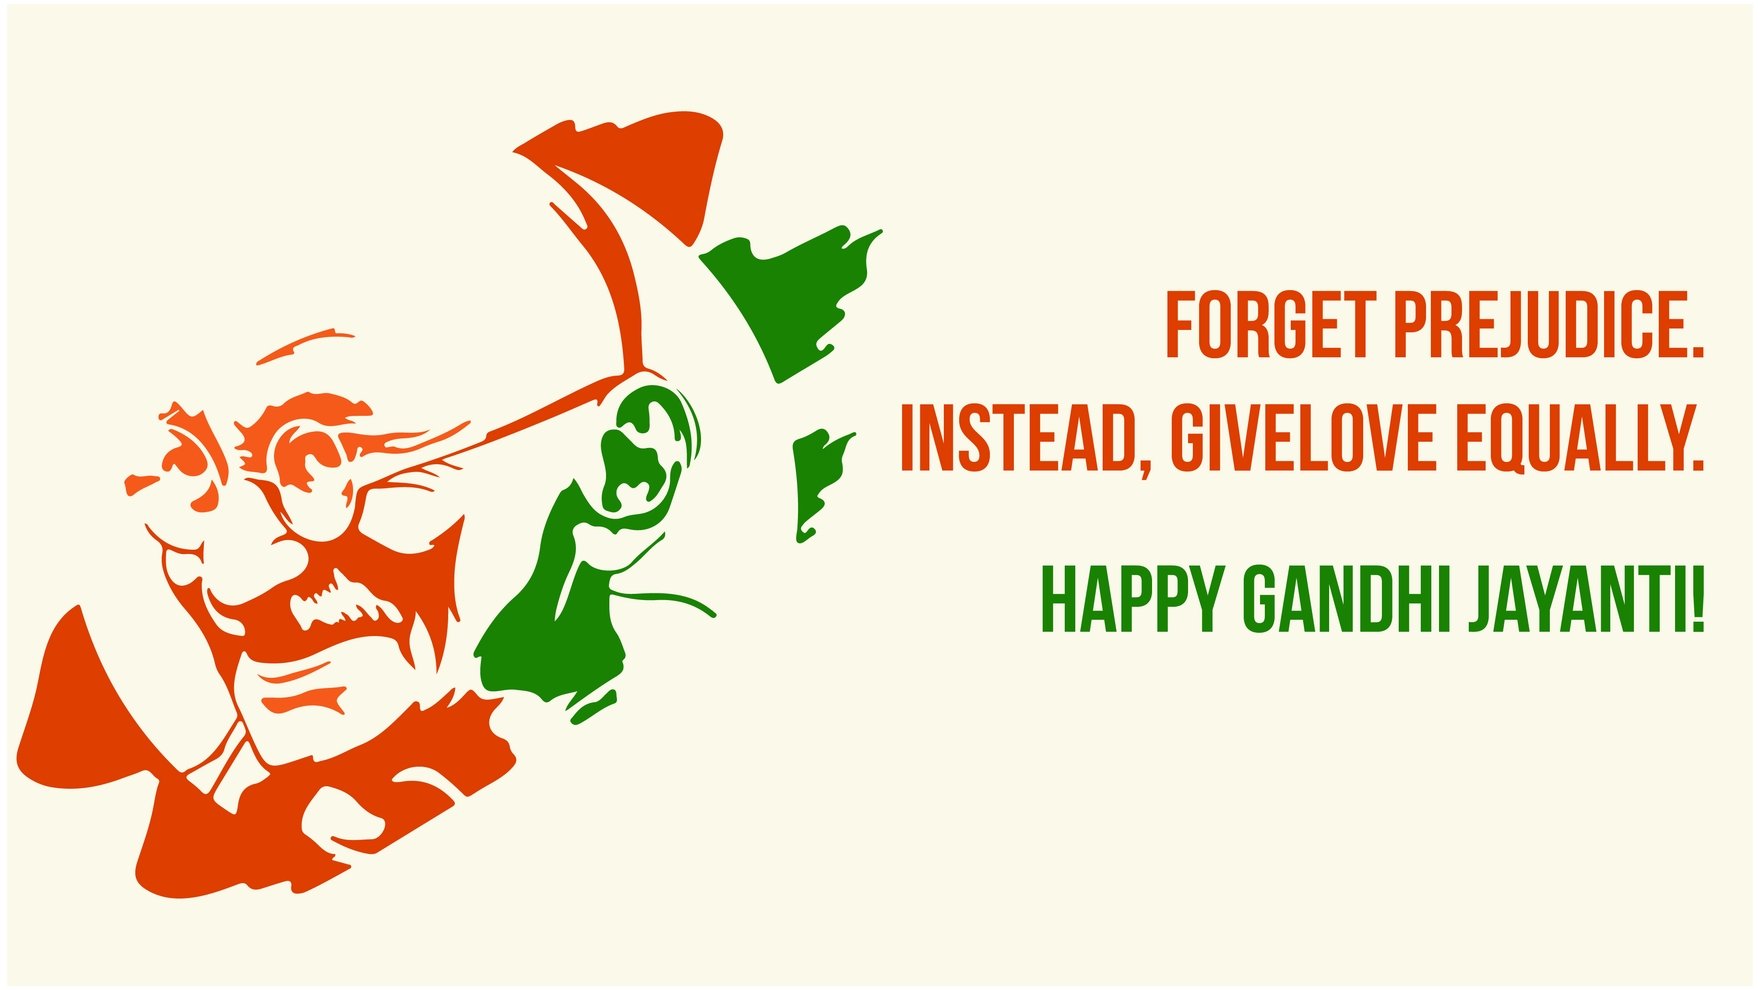 Gandhi Jayanti Greeting Card Background in PDF, Illustrator, PSD, EPS, SVG, JPG, PNG